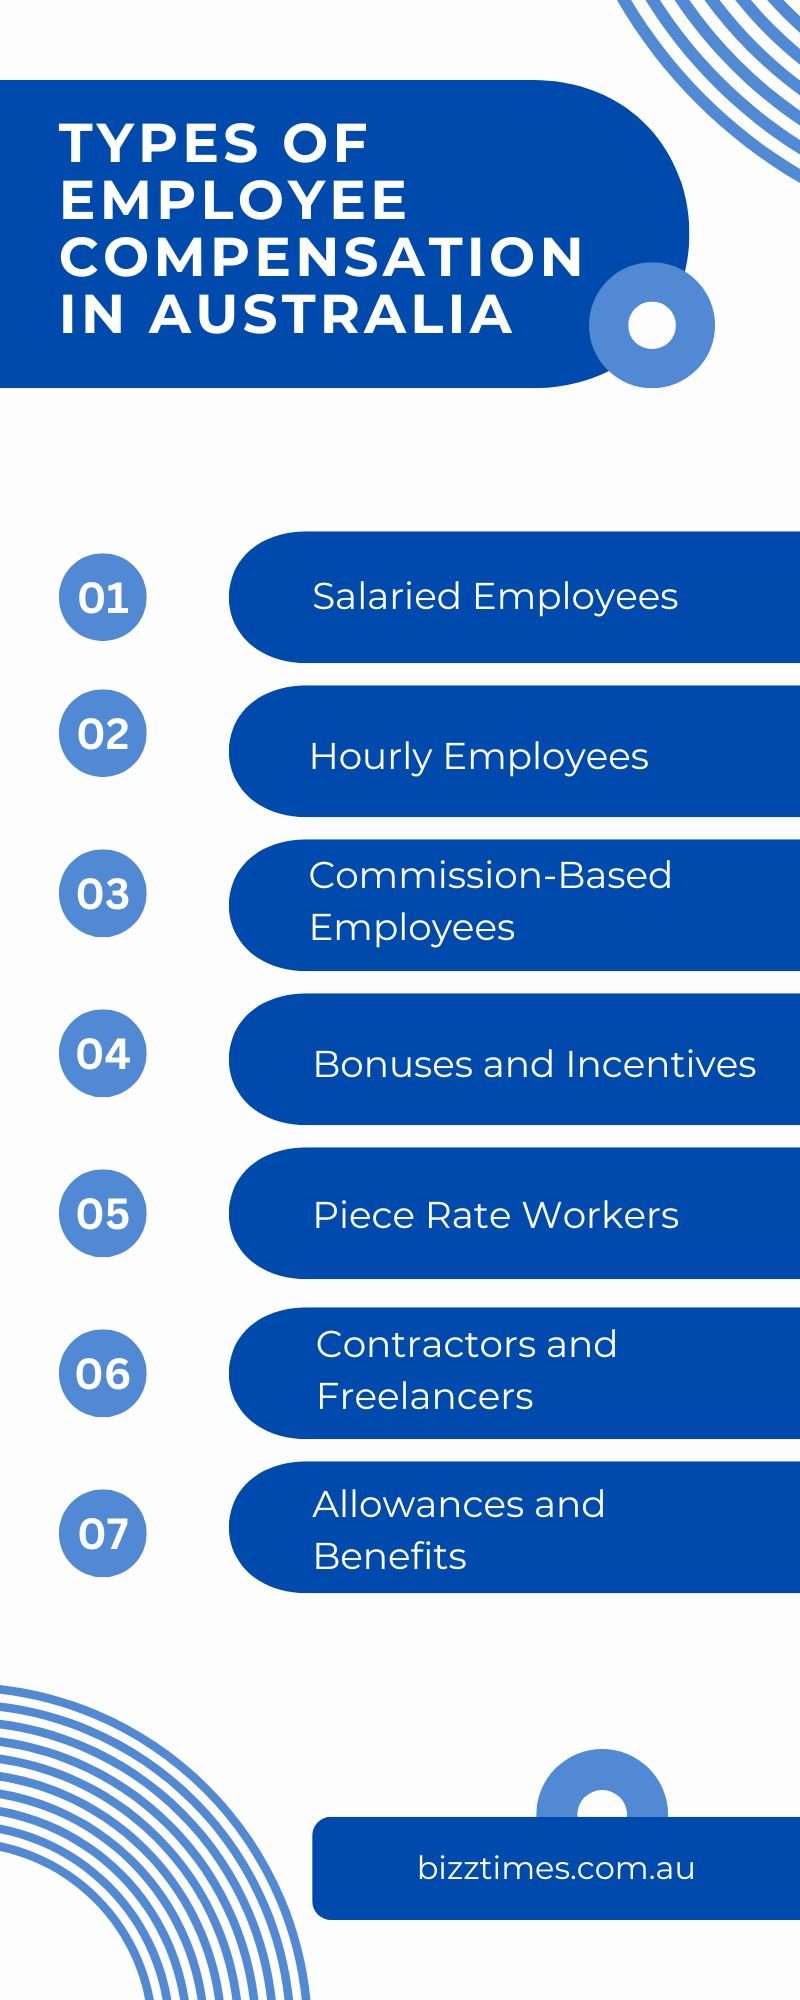 Types of employee compensation in Australia